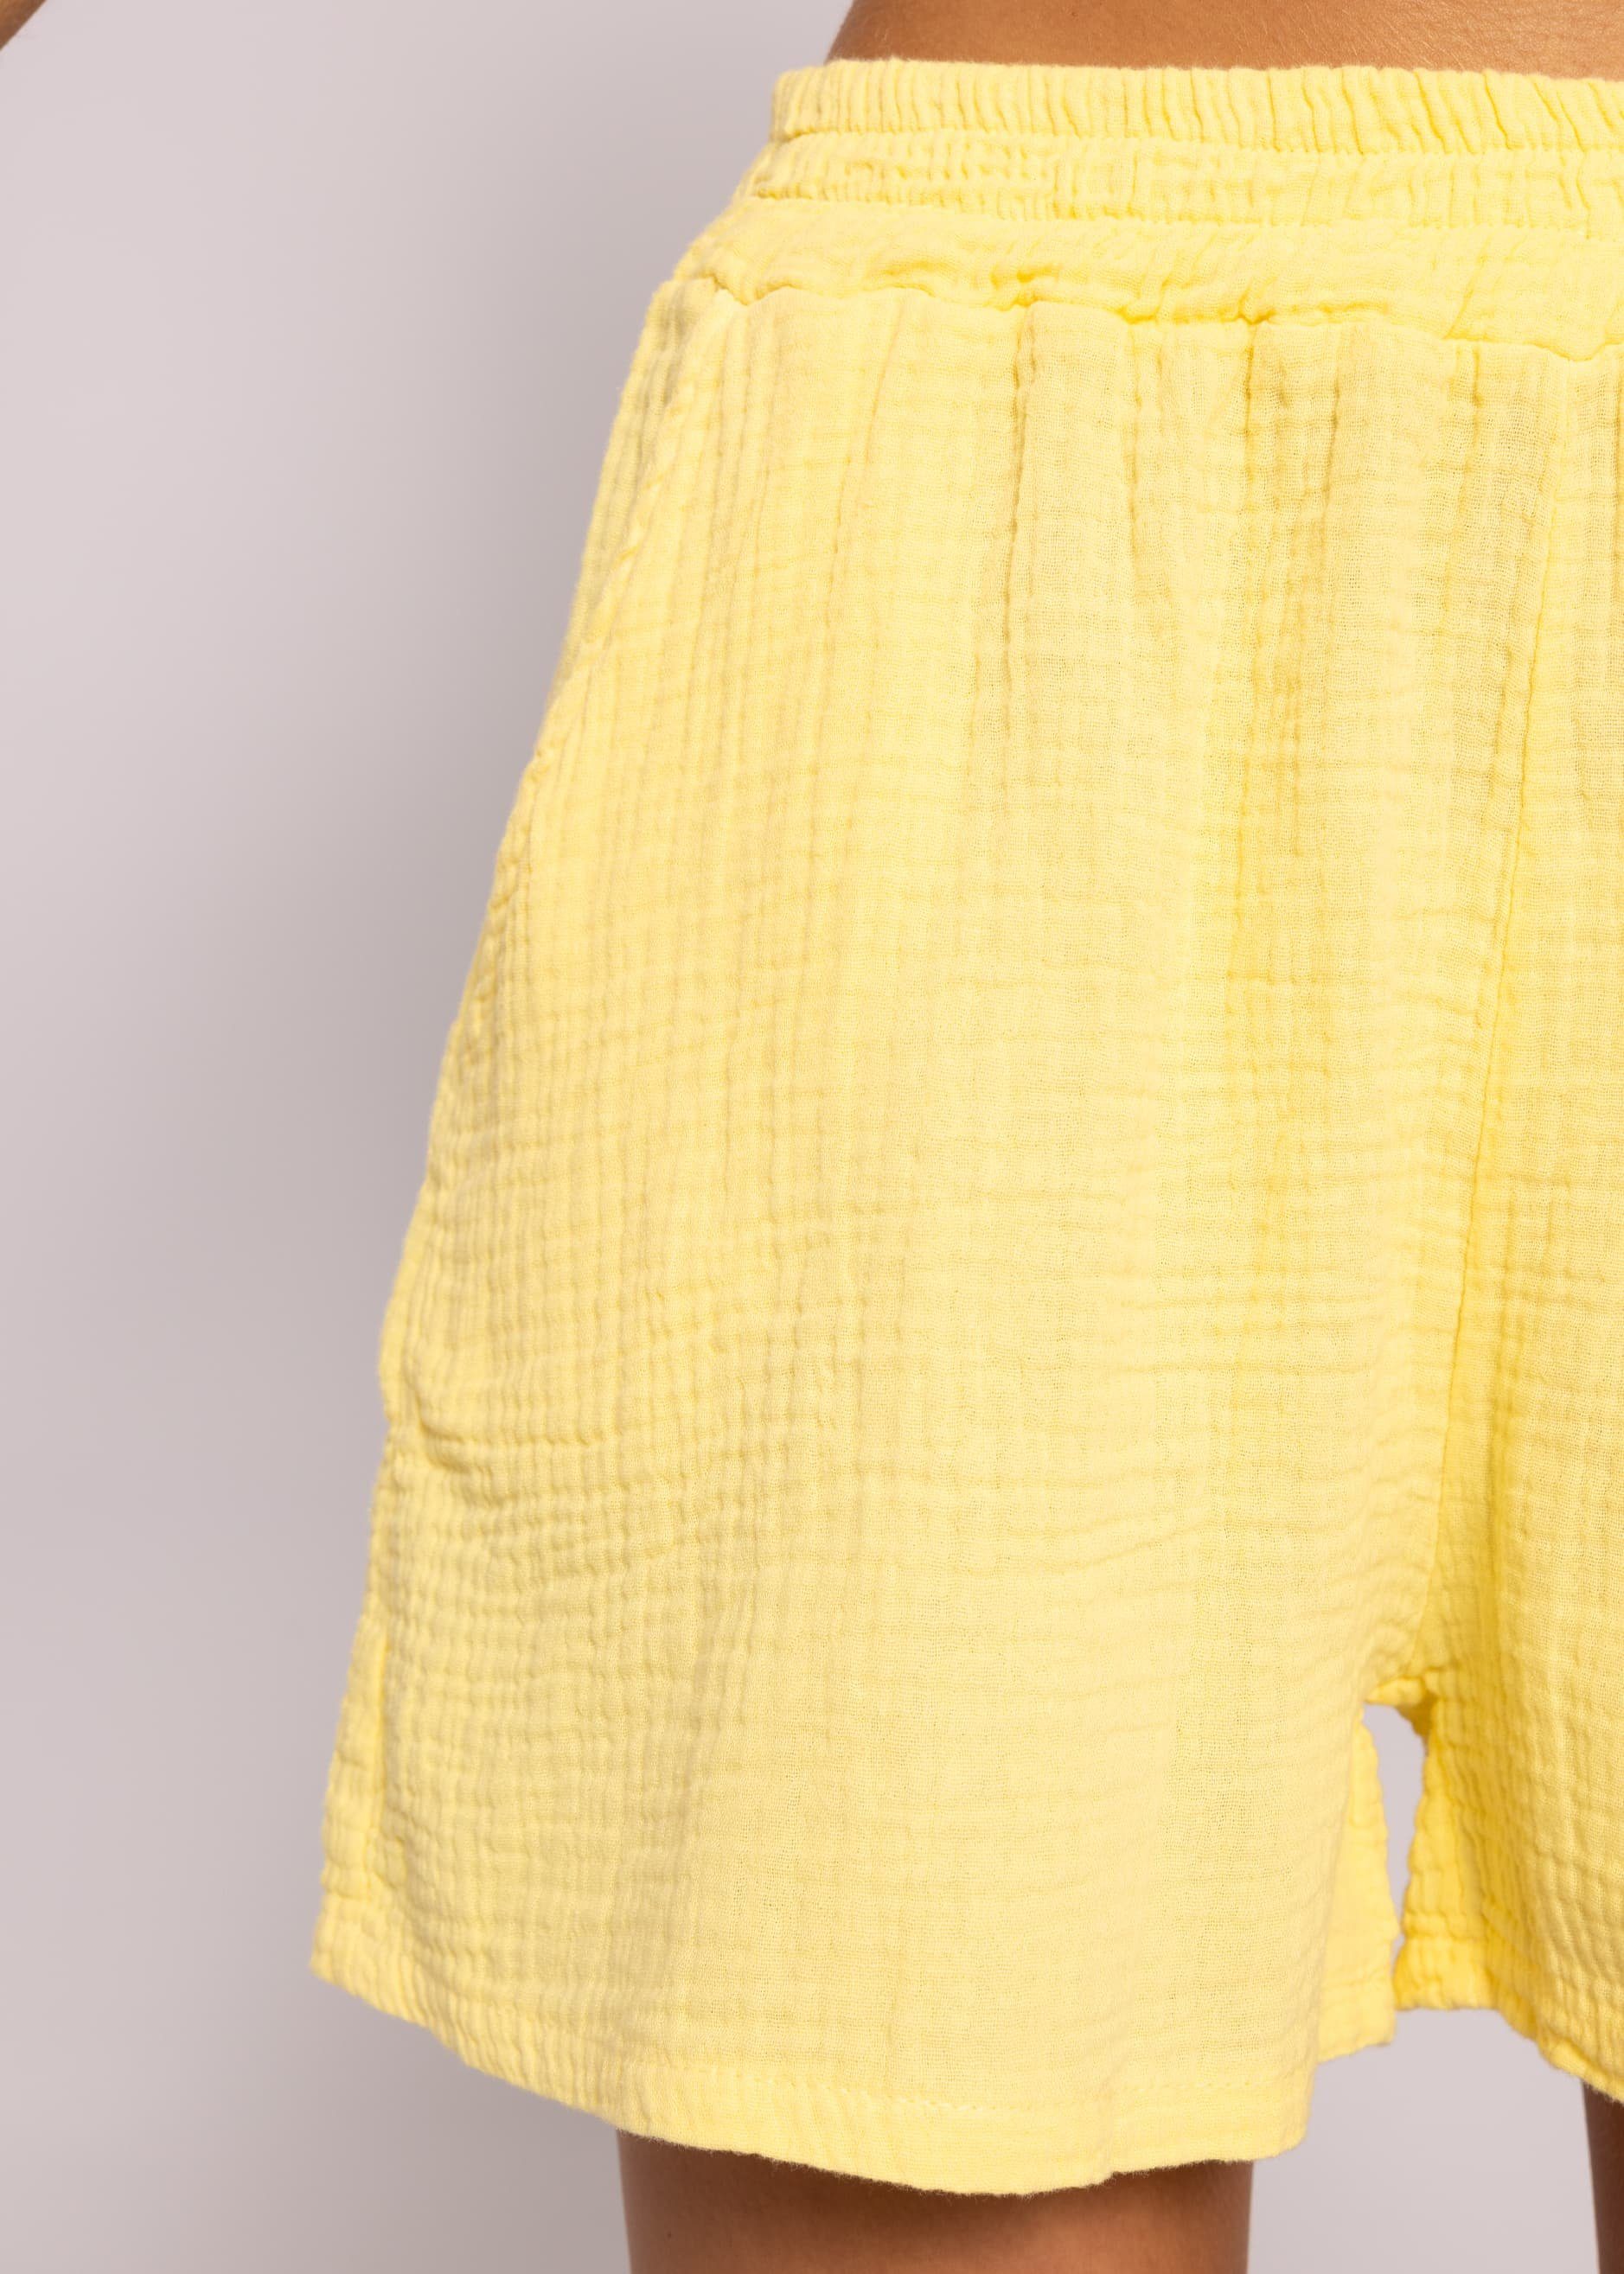 100 in Damen Made Hose Baumwolle Shorts atmungsaktiv, Kurz Gelb SASSYCLASSY (Musselin), % Sommer Musselin sehr Italy leicht,